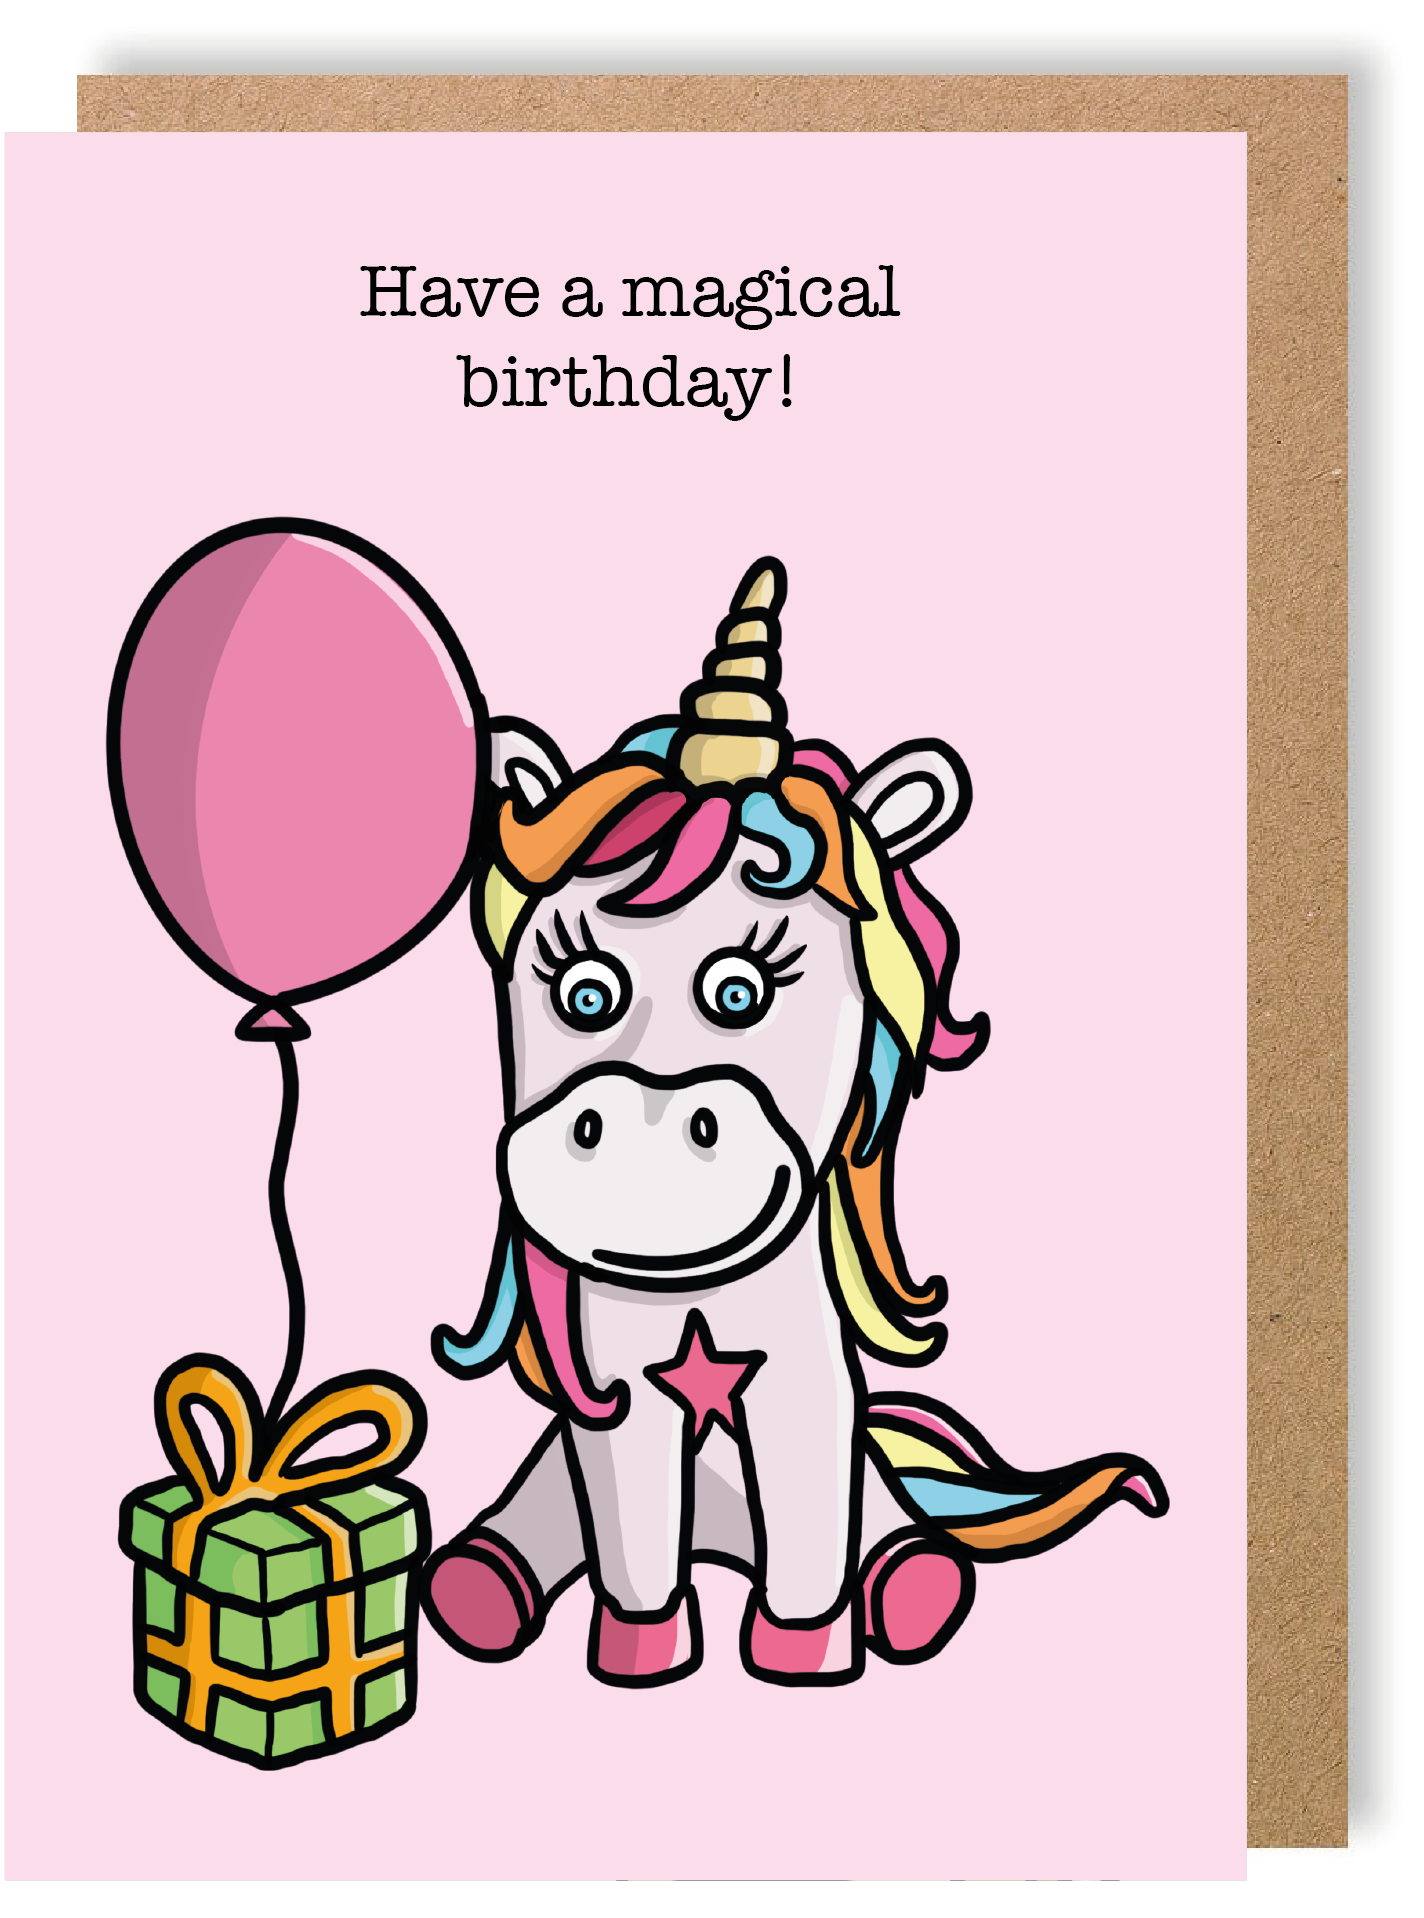 Have A Magical Birthday! - Unicorn - Greetings Card - LukeHorton Art